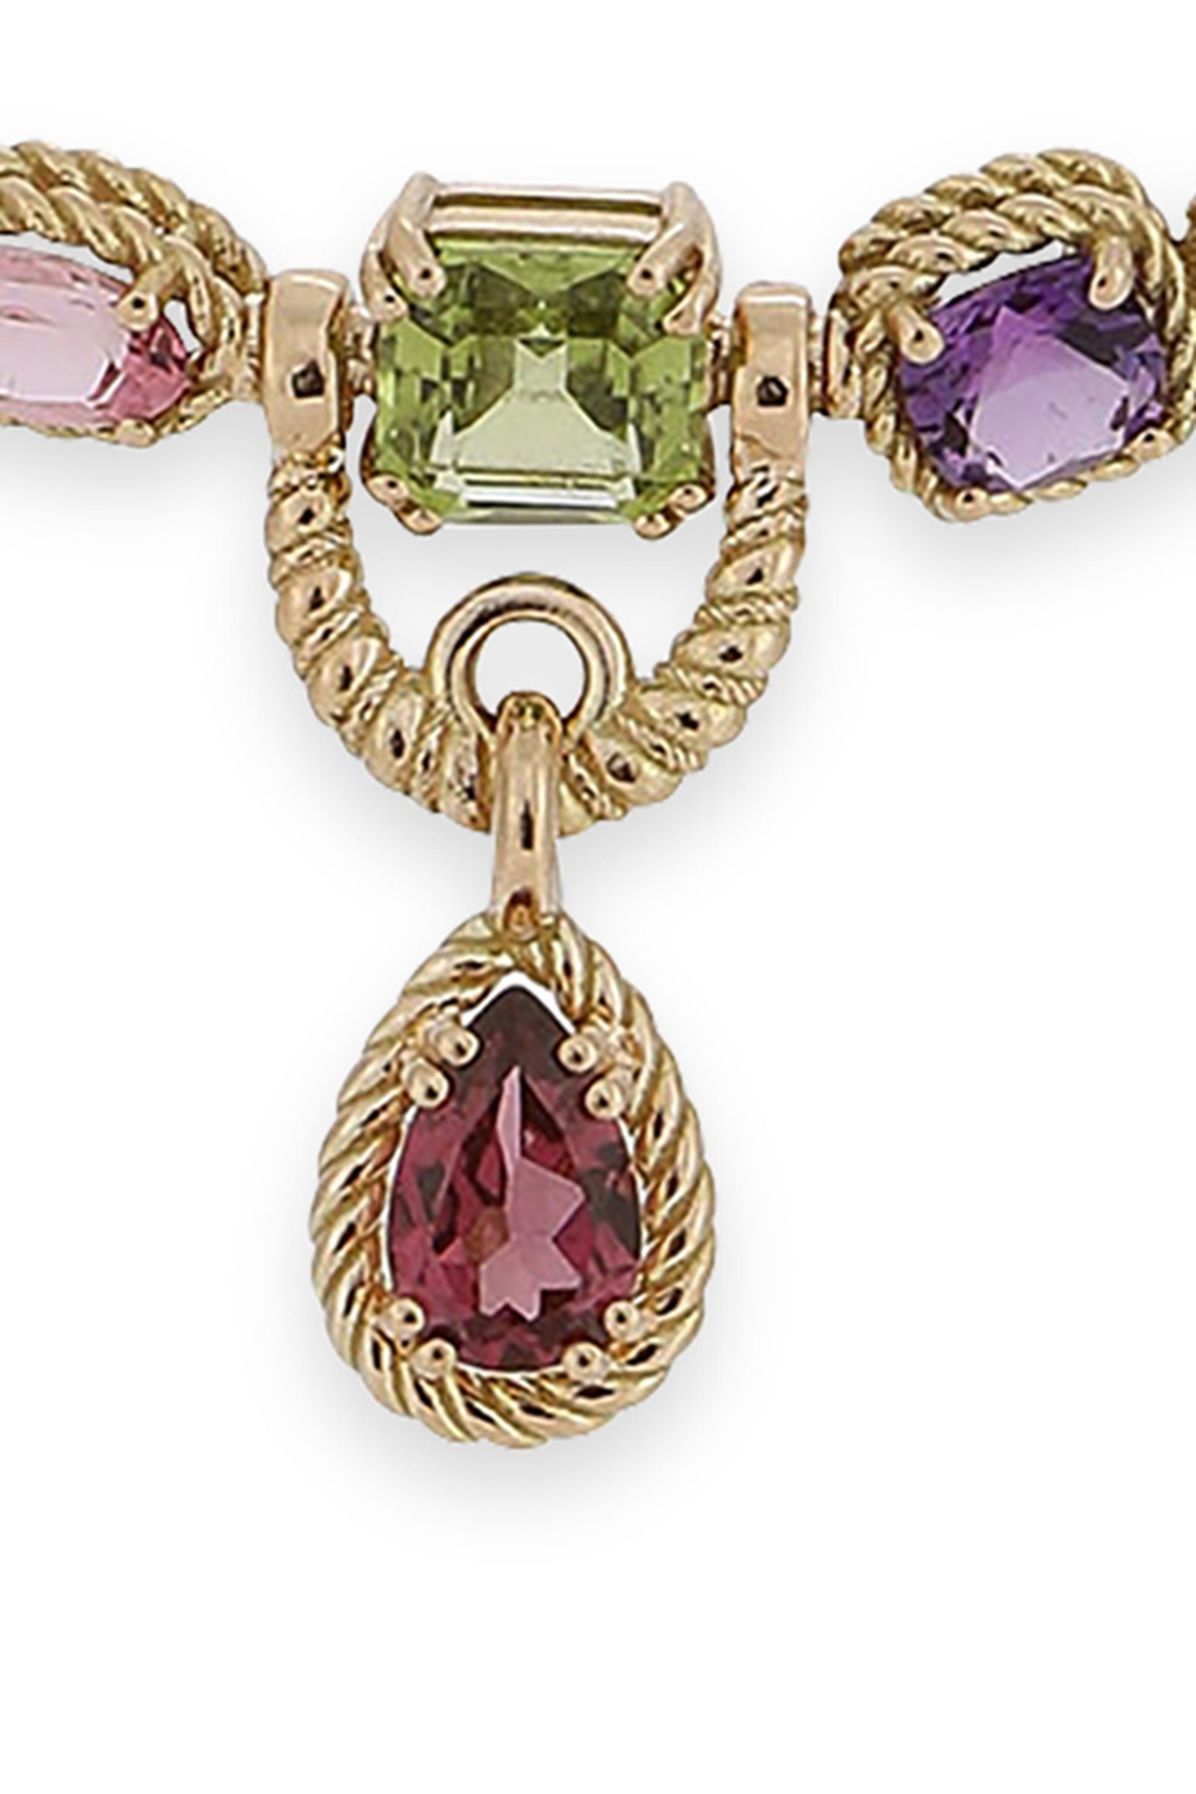 Dolce & Gabbana 18kt yellow gold bracelet with mutlicolored fine gemstones